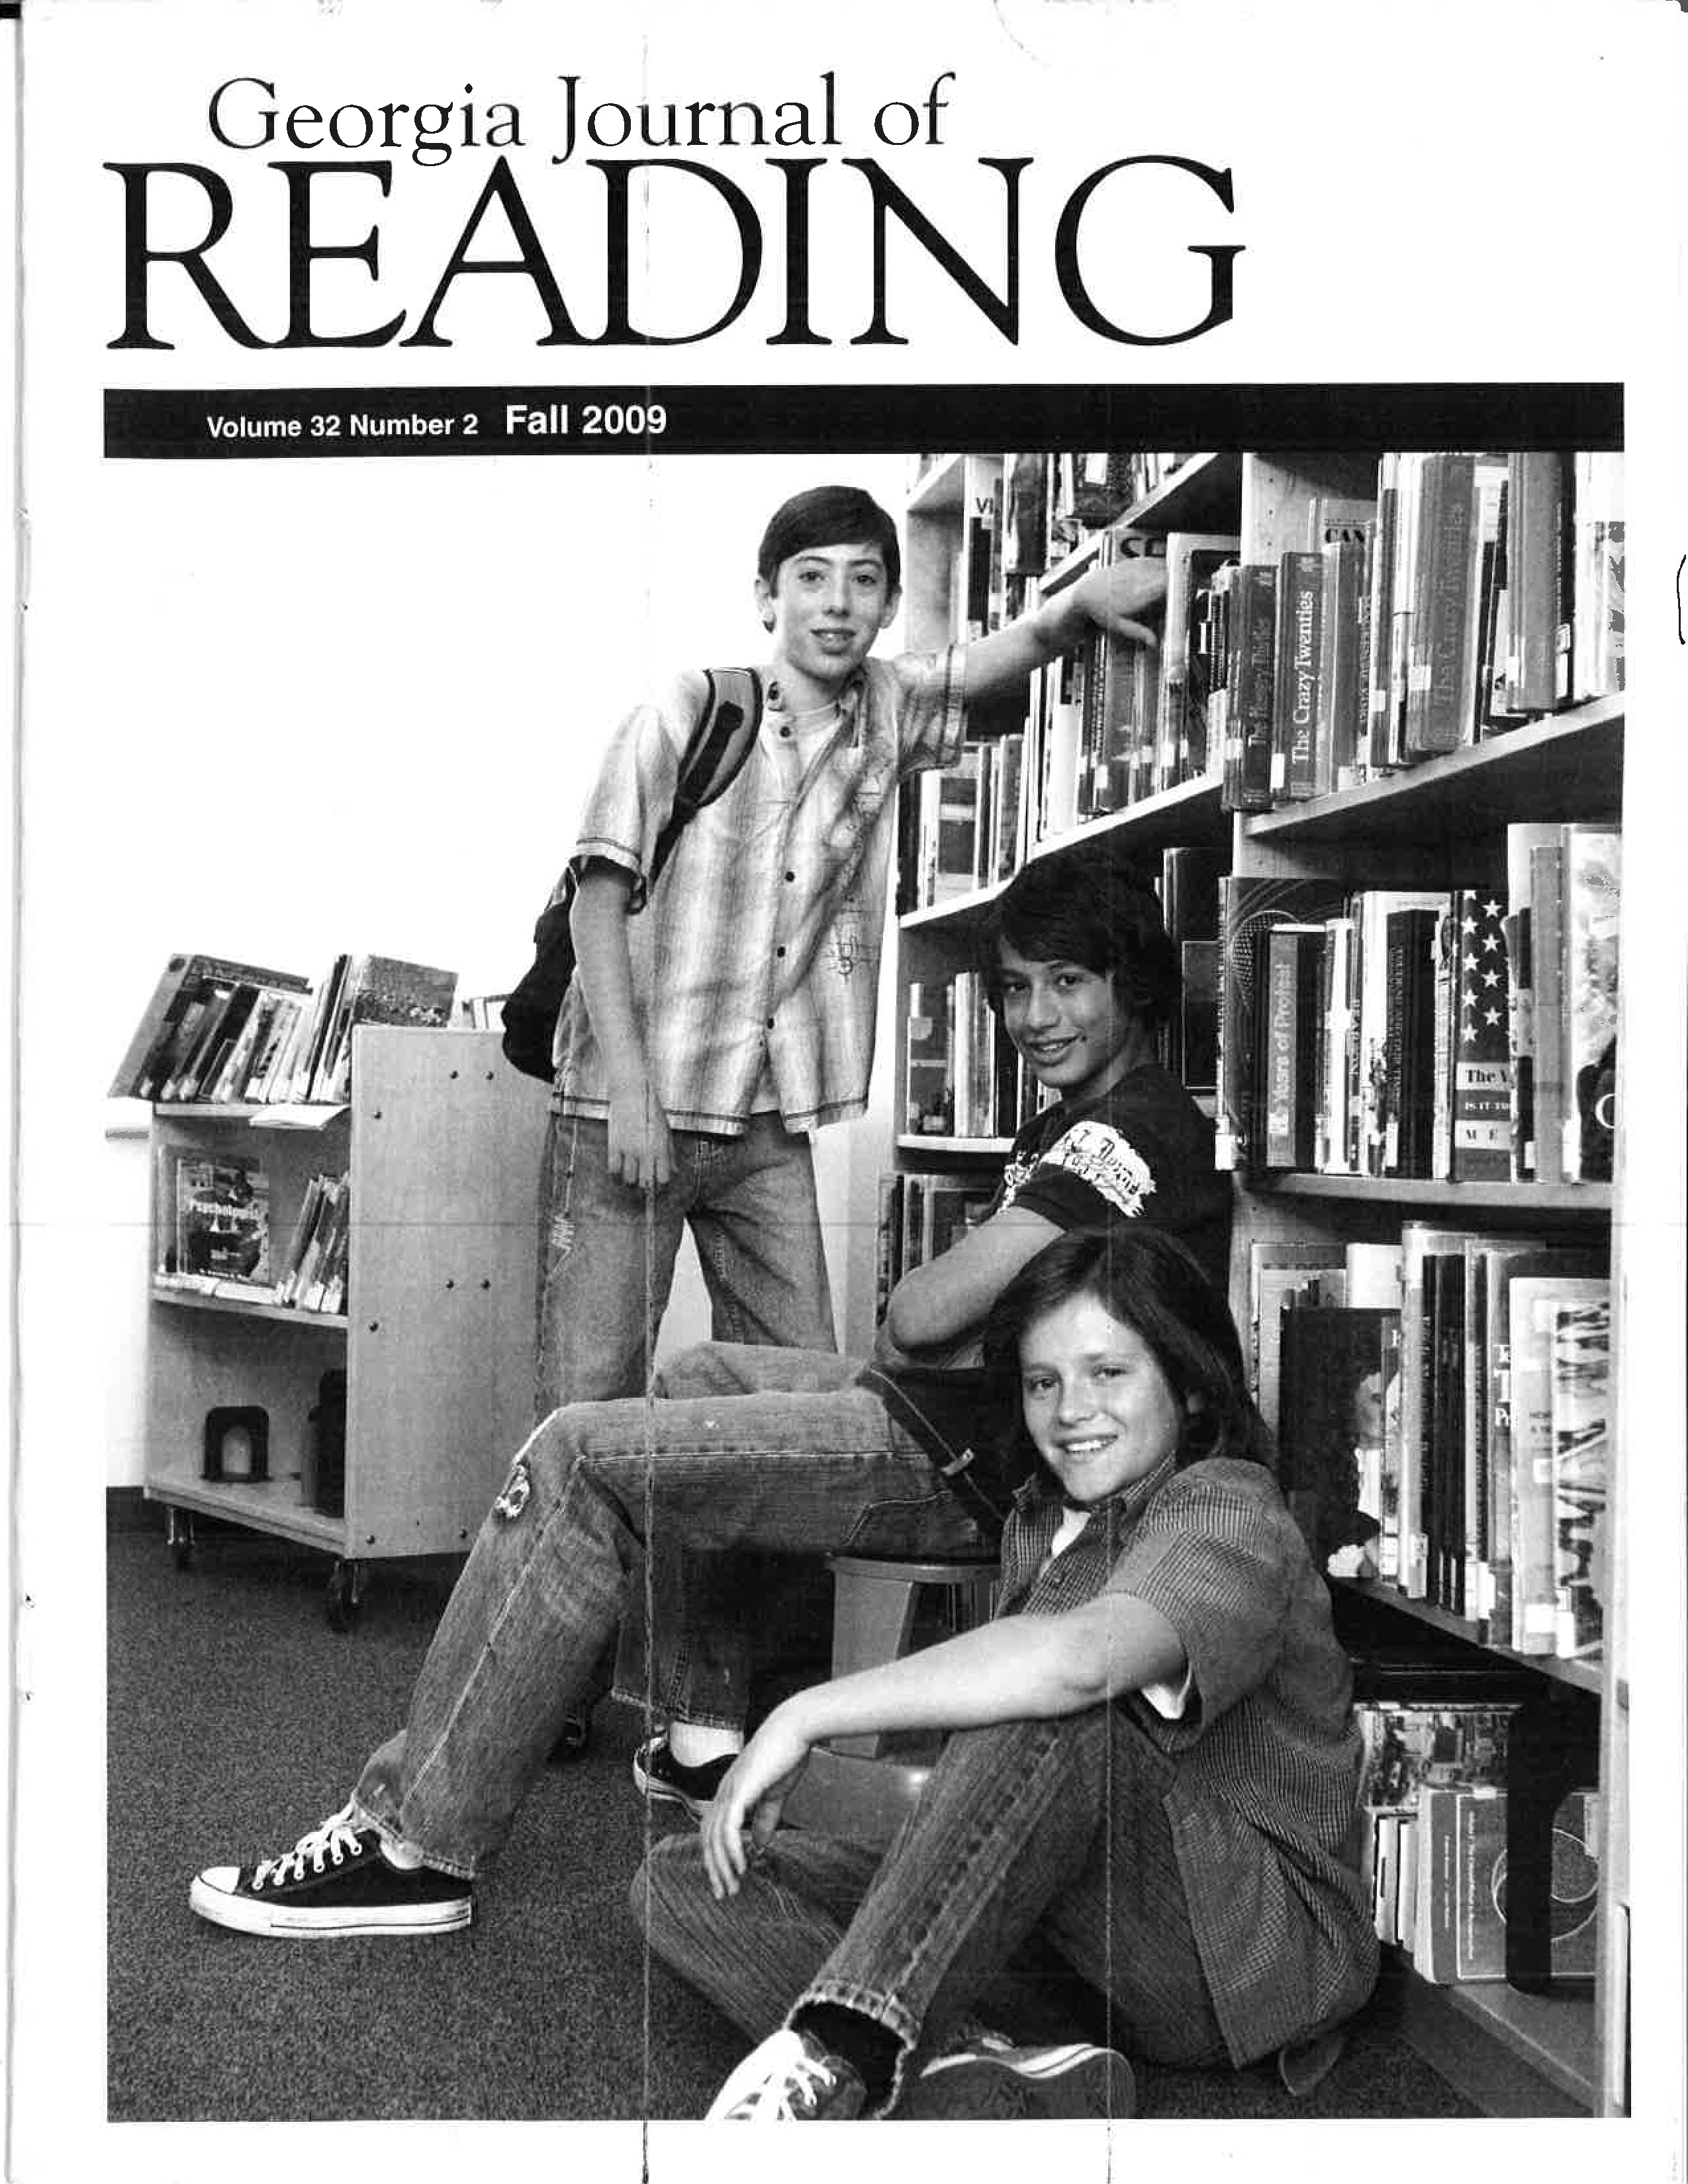 Georgia Journal of Reading (Fall 2009)